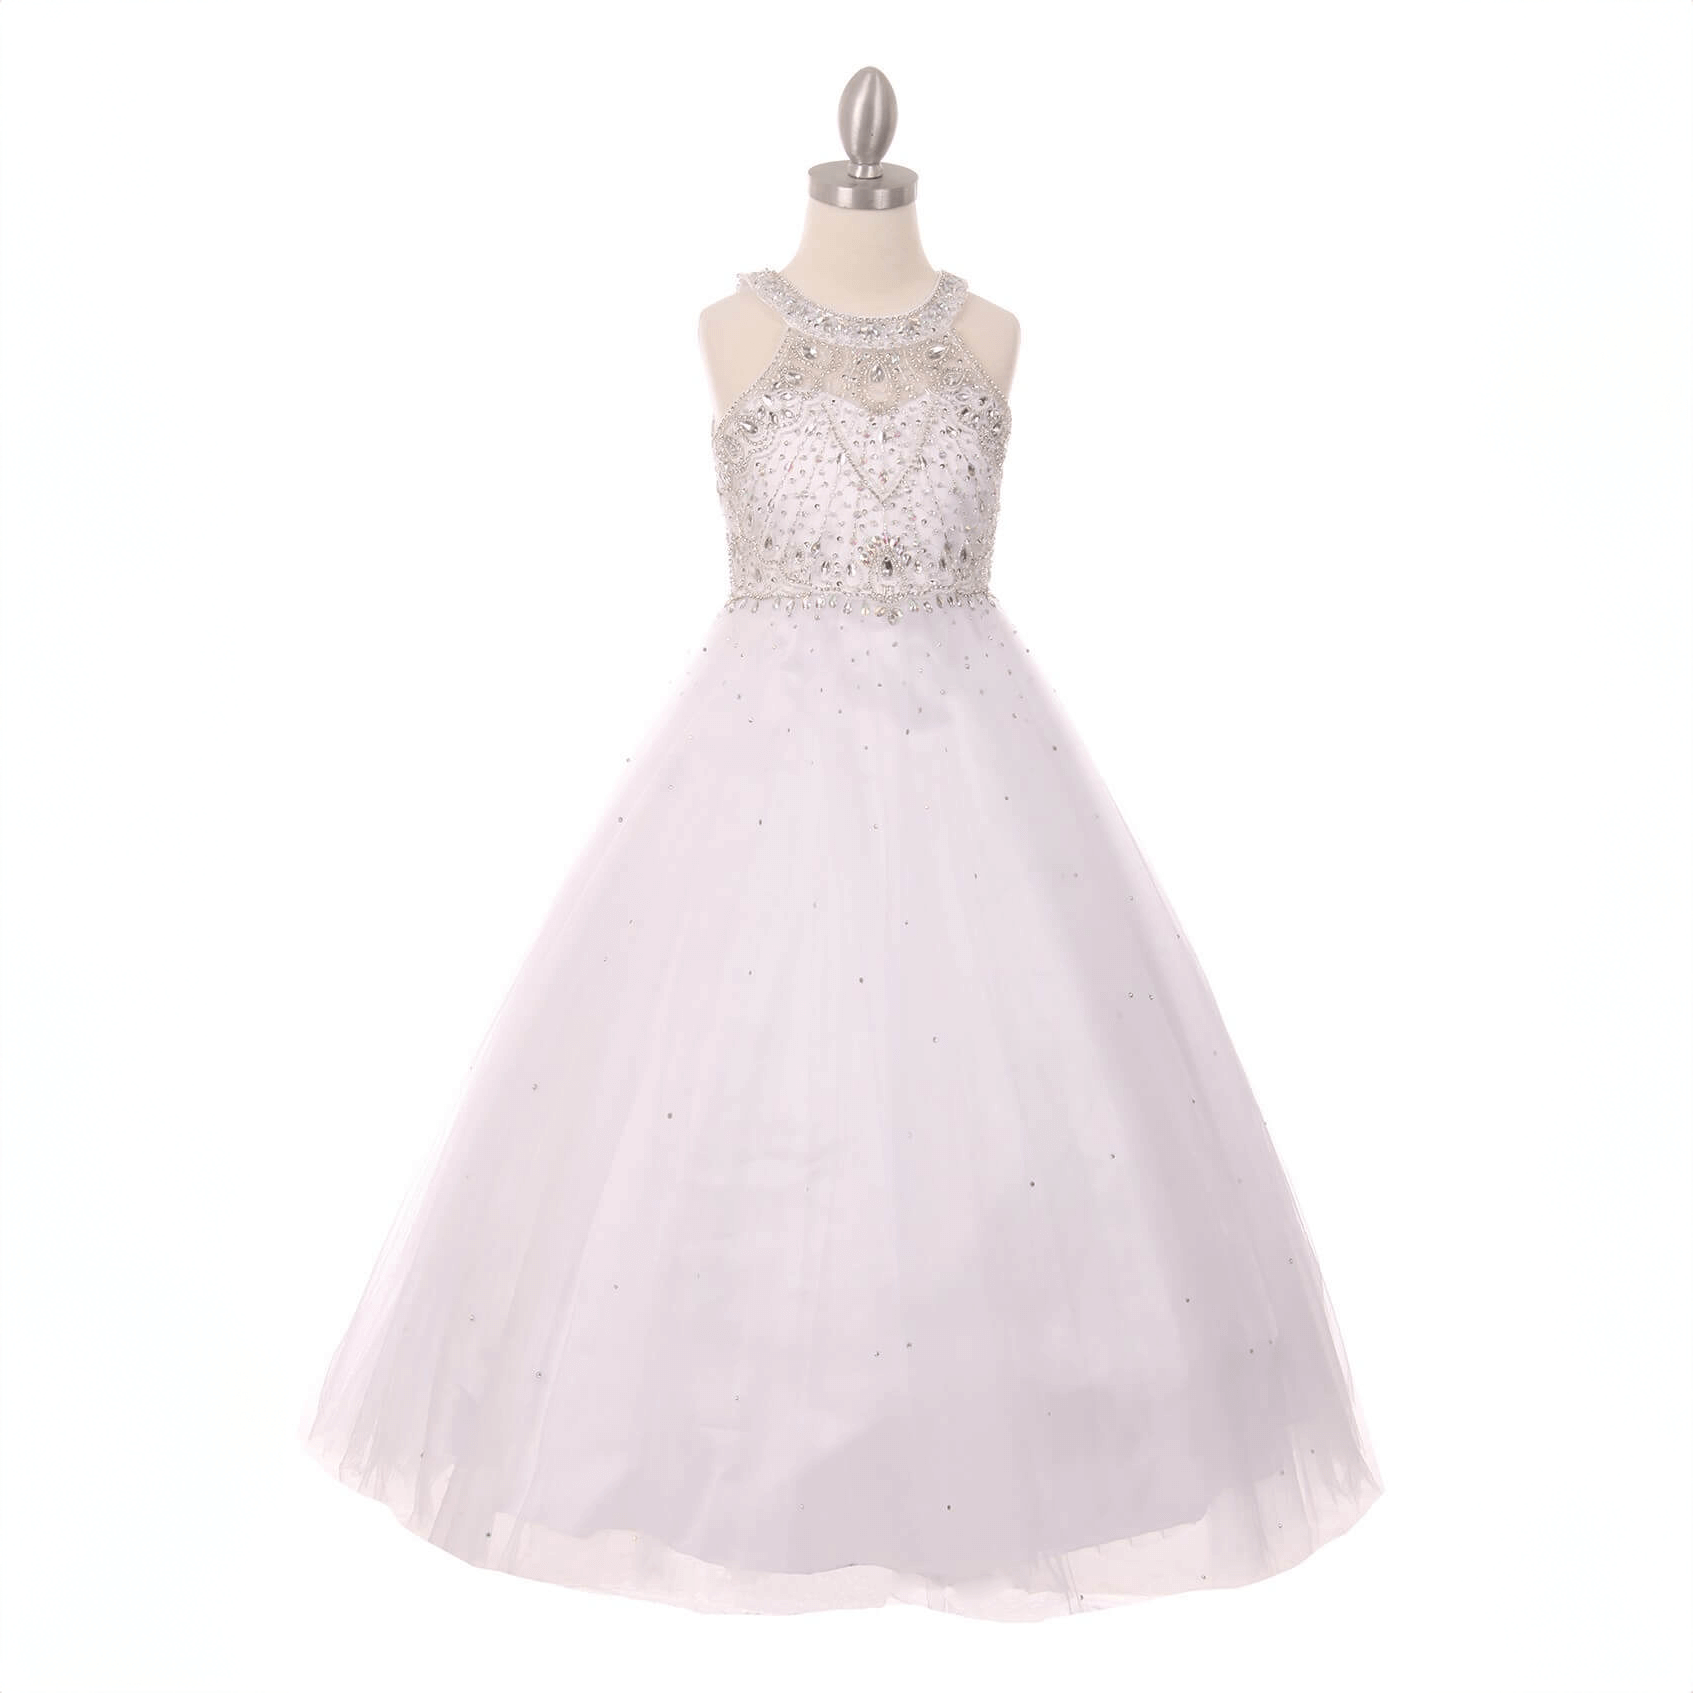 white coloured full length princess-style dress